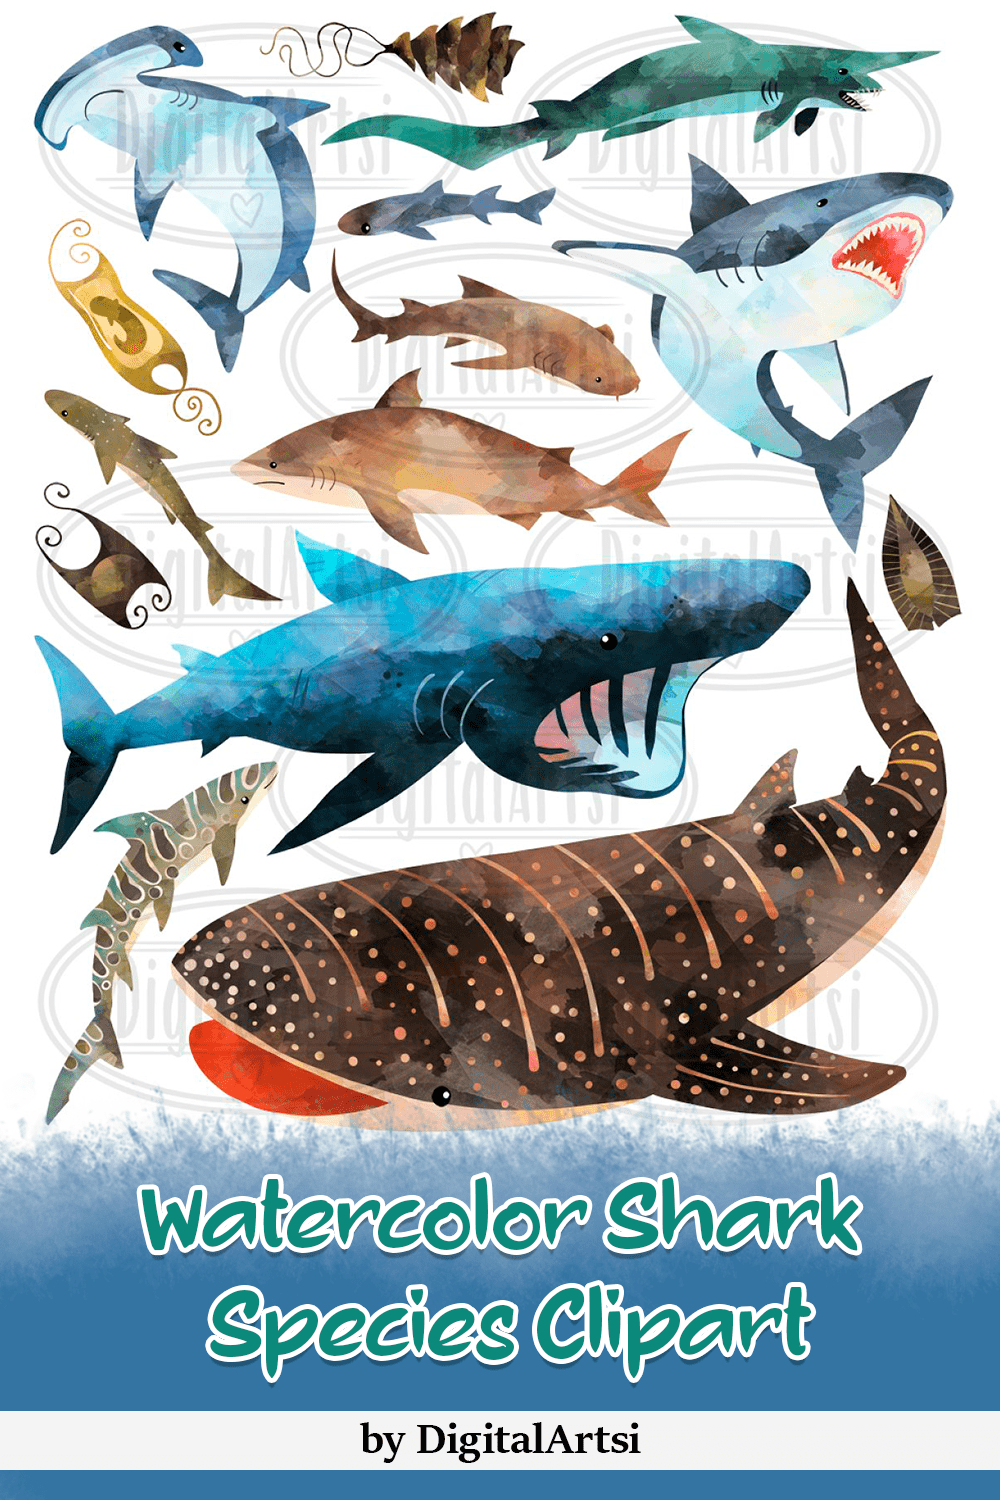 watercolor shark species clipart pinterest